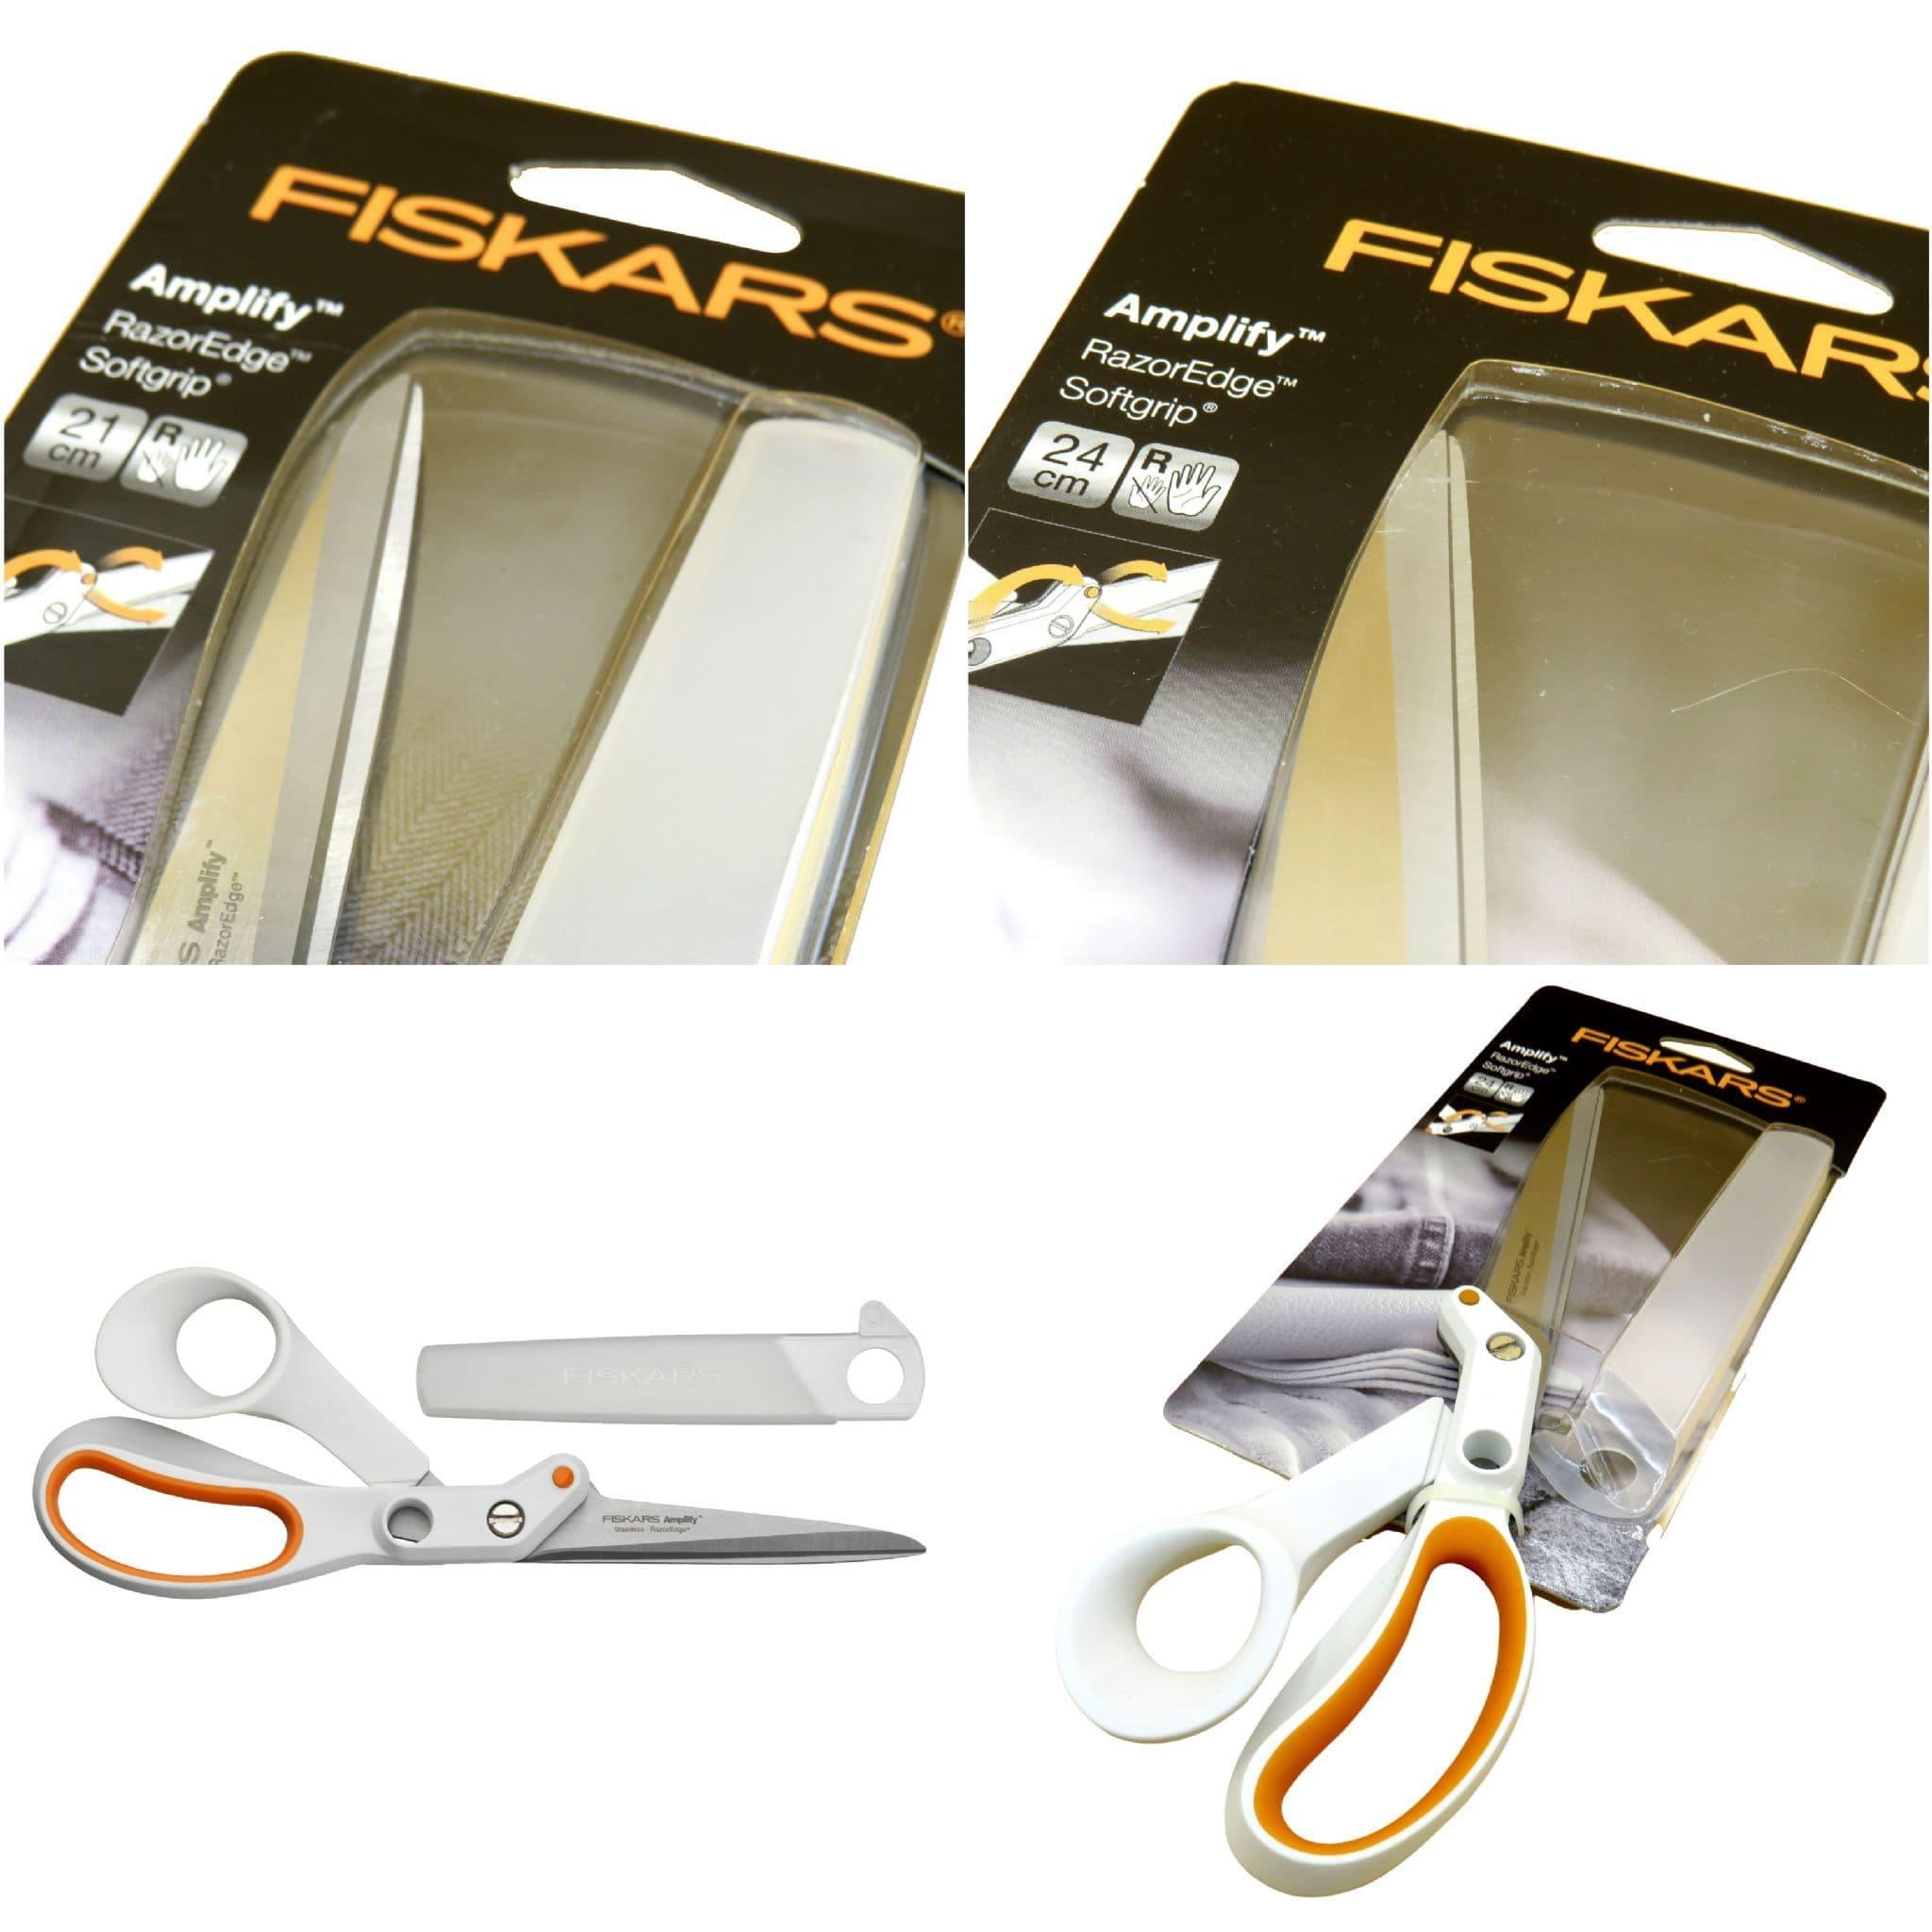 https://cdn.ecommercedns.uk/files/3/252923/8/28121508/fiskars-amplify-razoredge-softgrip-scissors-2-sizes-scissor-size.jpg